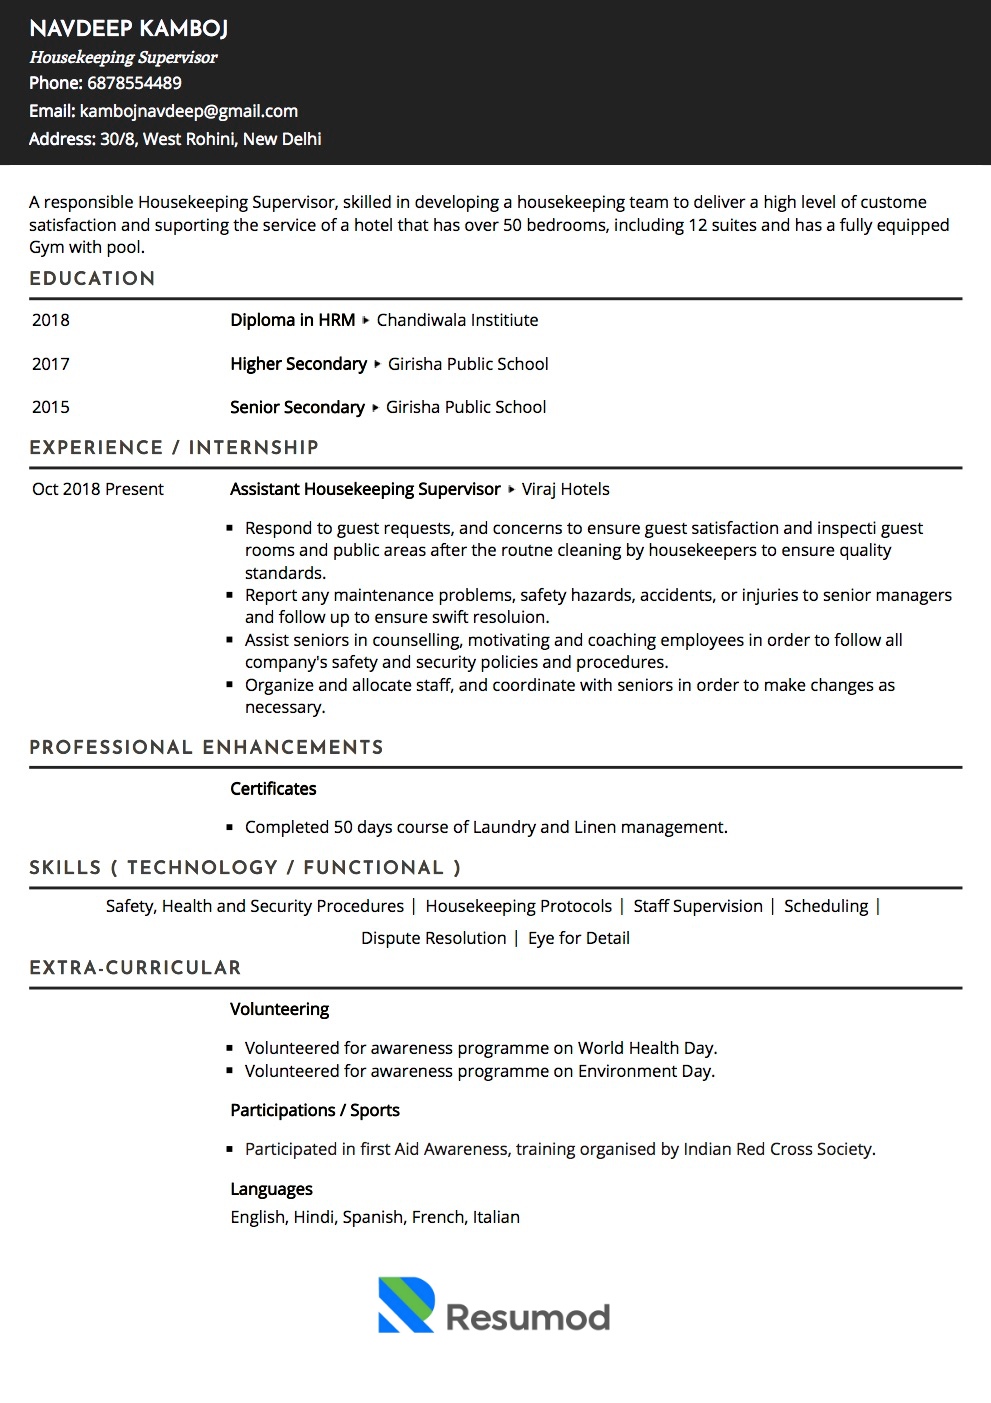 Sample Resume of Housekeeping Supervisor  | Free Resume Templates & Samples on Resumod.co